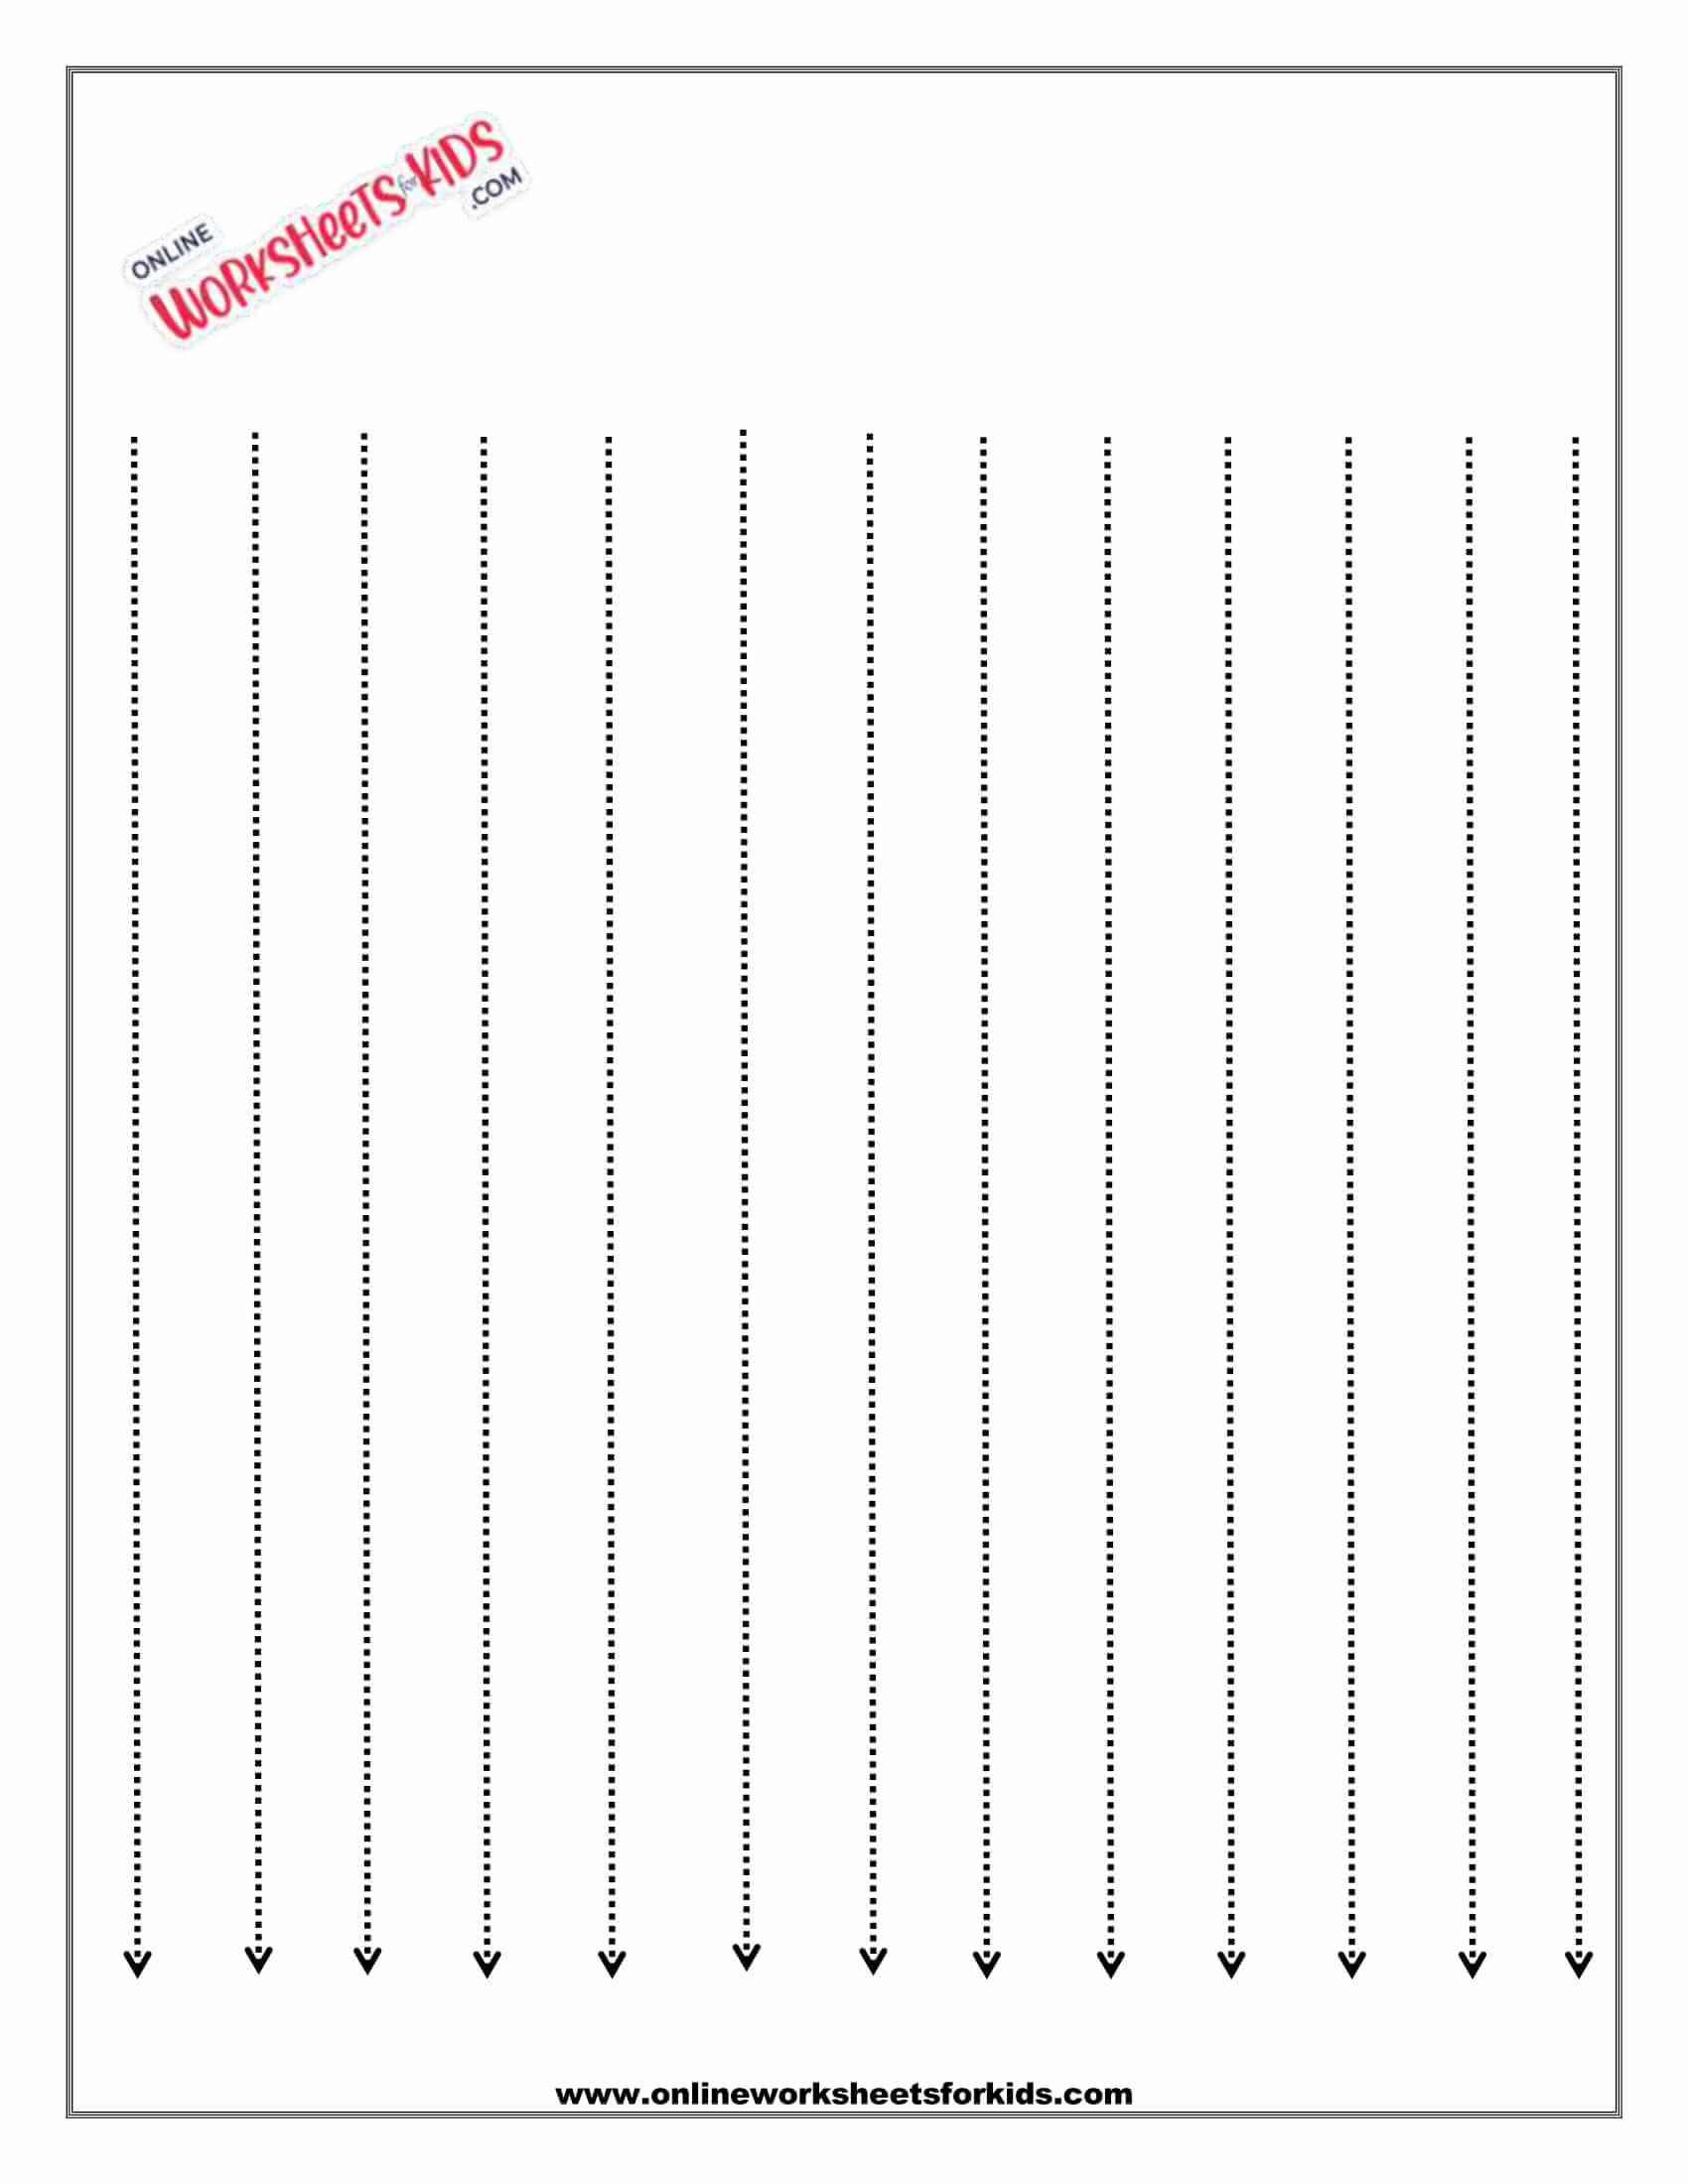 tracing horizontal lines worksheets